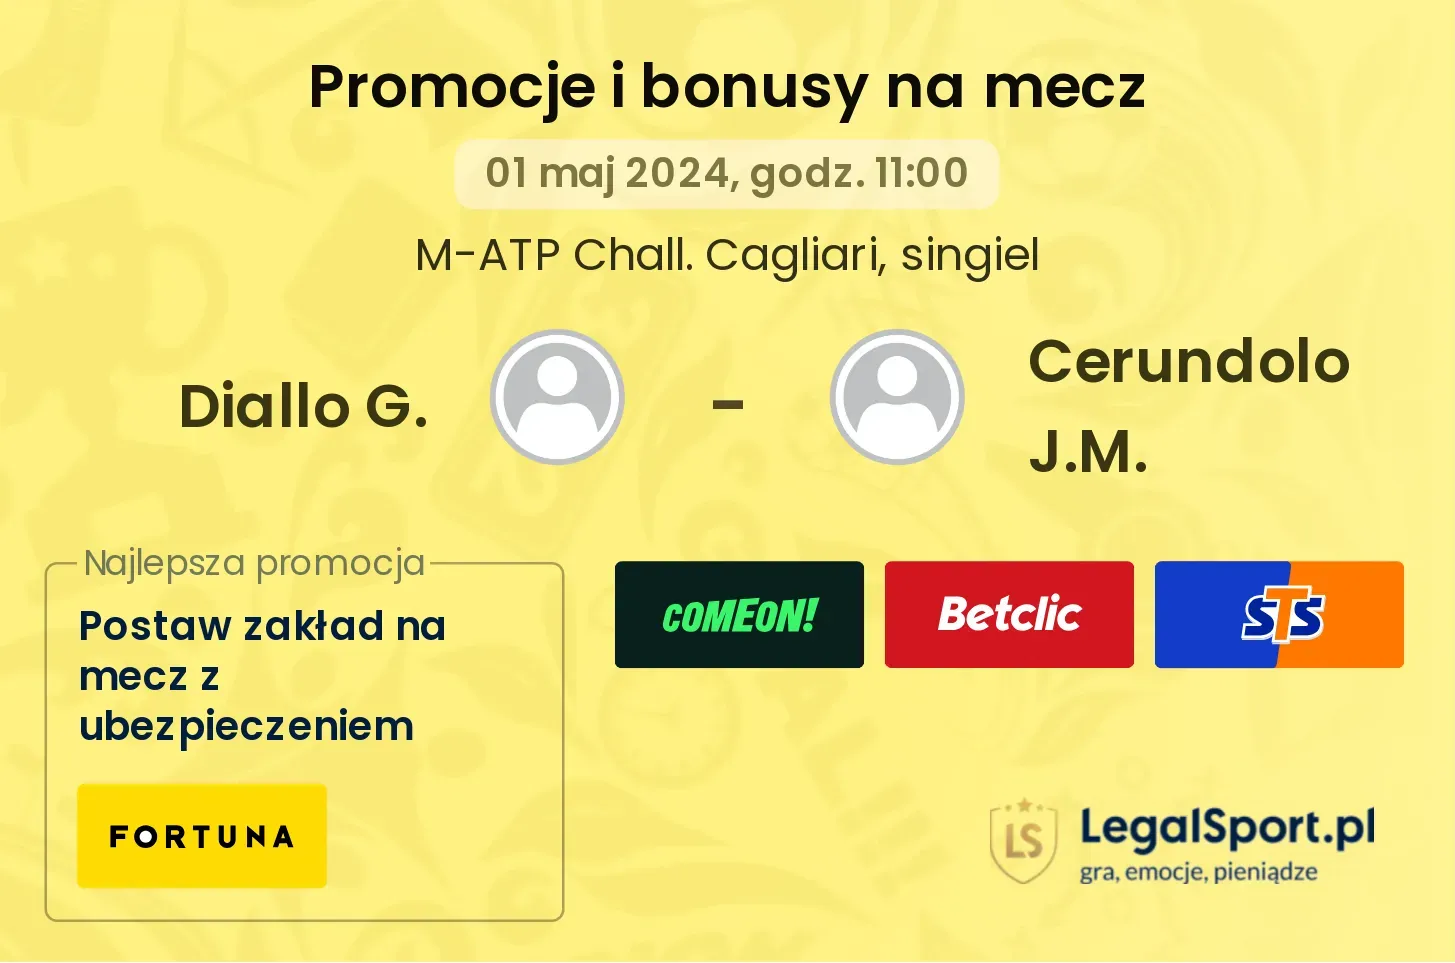 Diallo G. - Cerundolo J.M. promocje bonusy na mecz